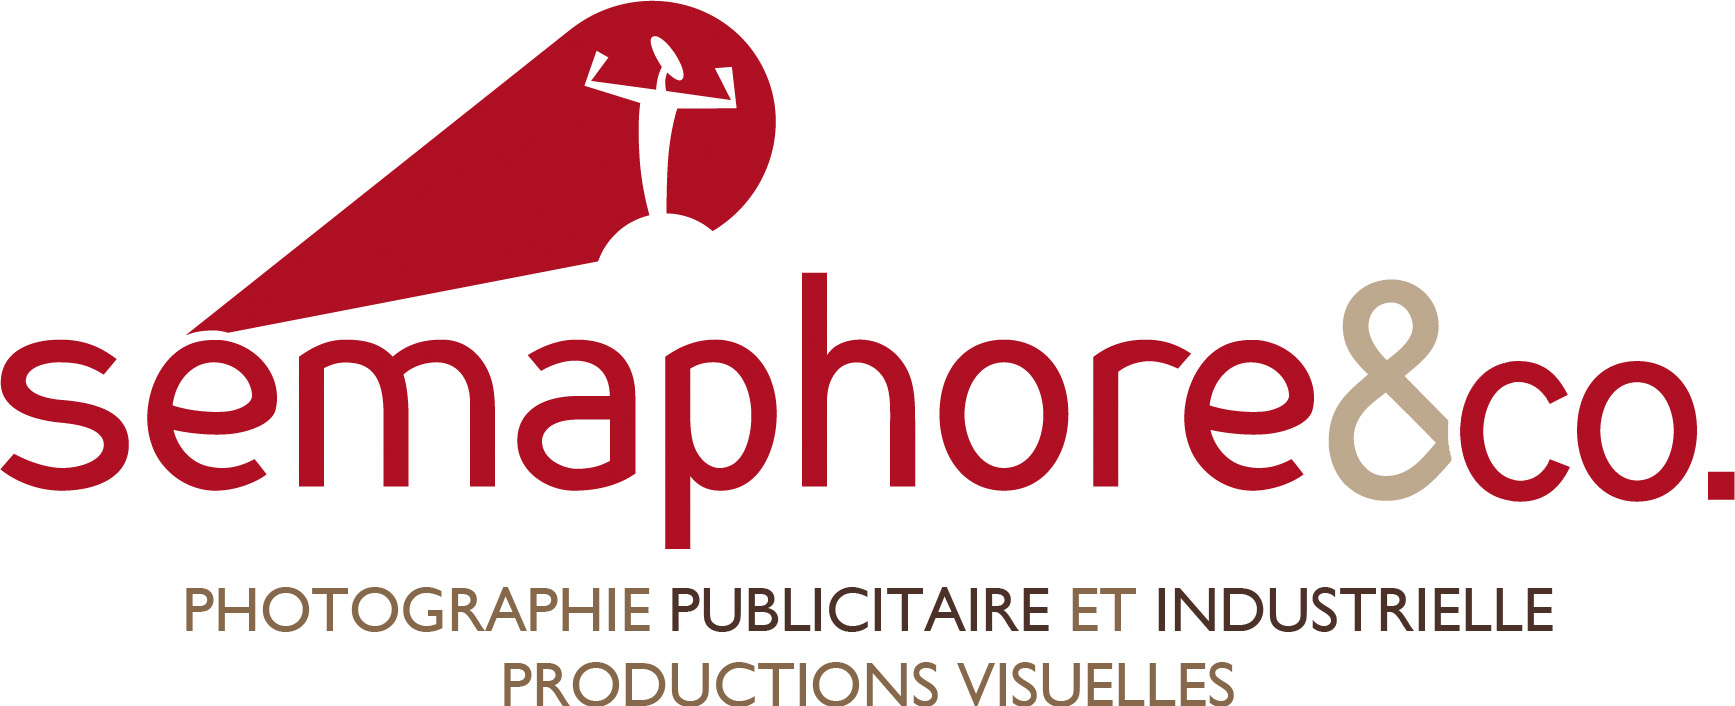 Semaphore&Co logo